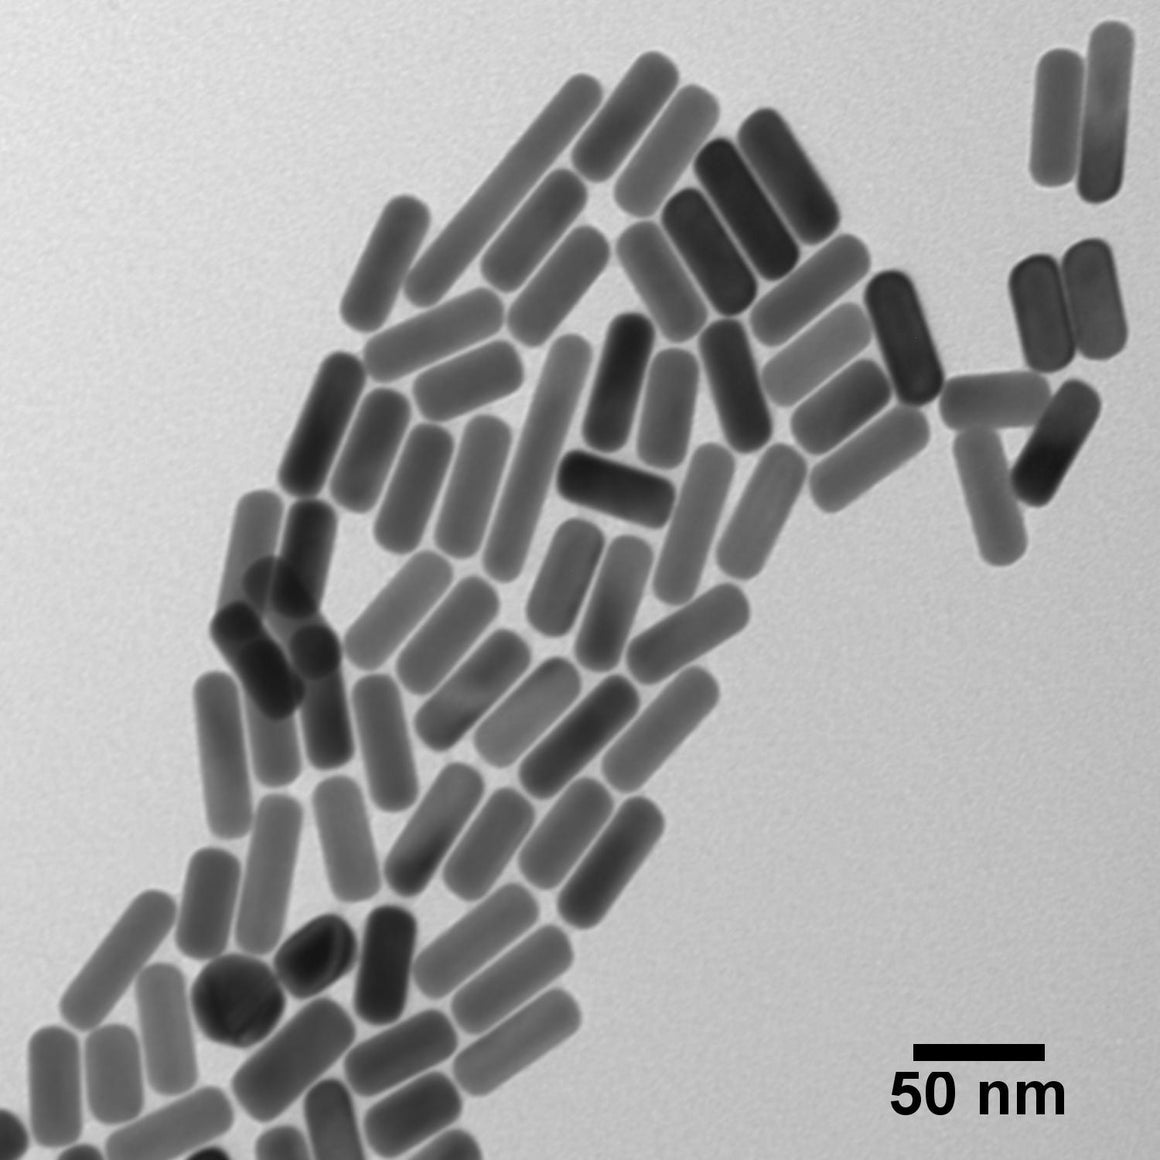 NanoXact Gold Nanorods – PEG-Carboxyl